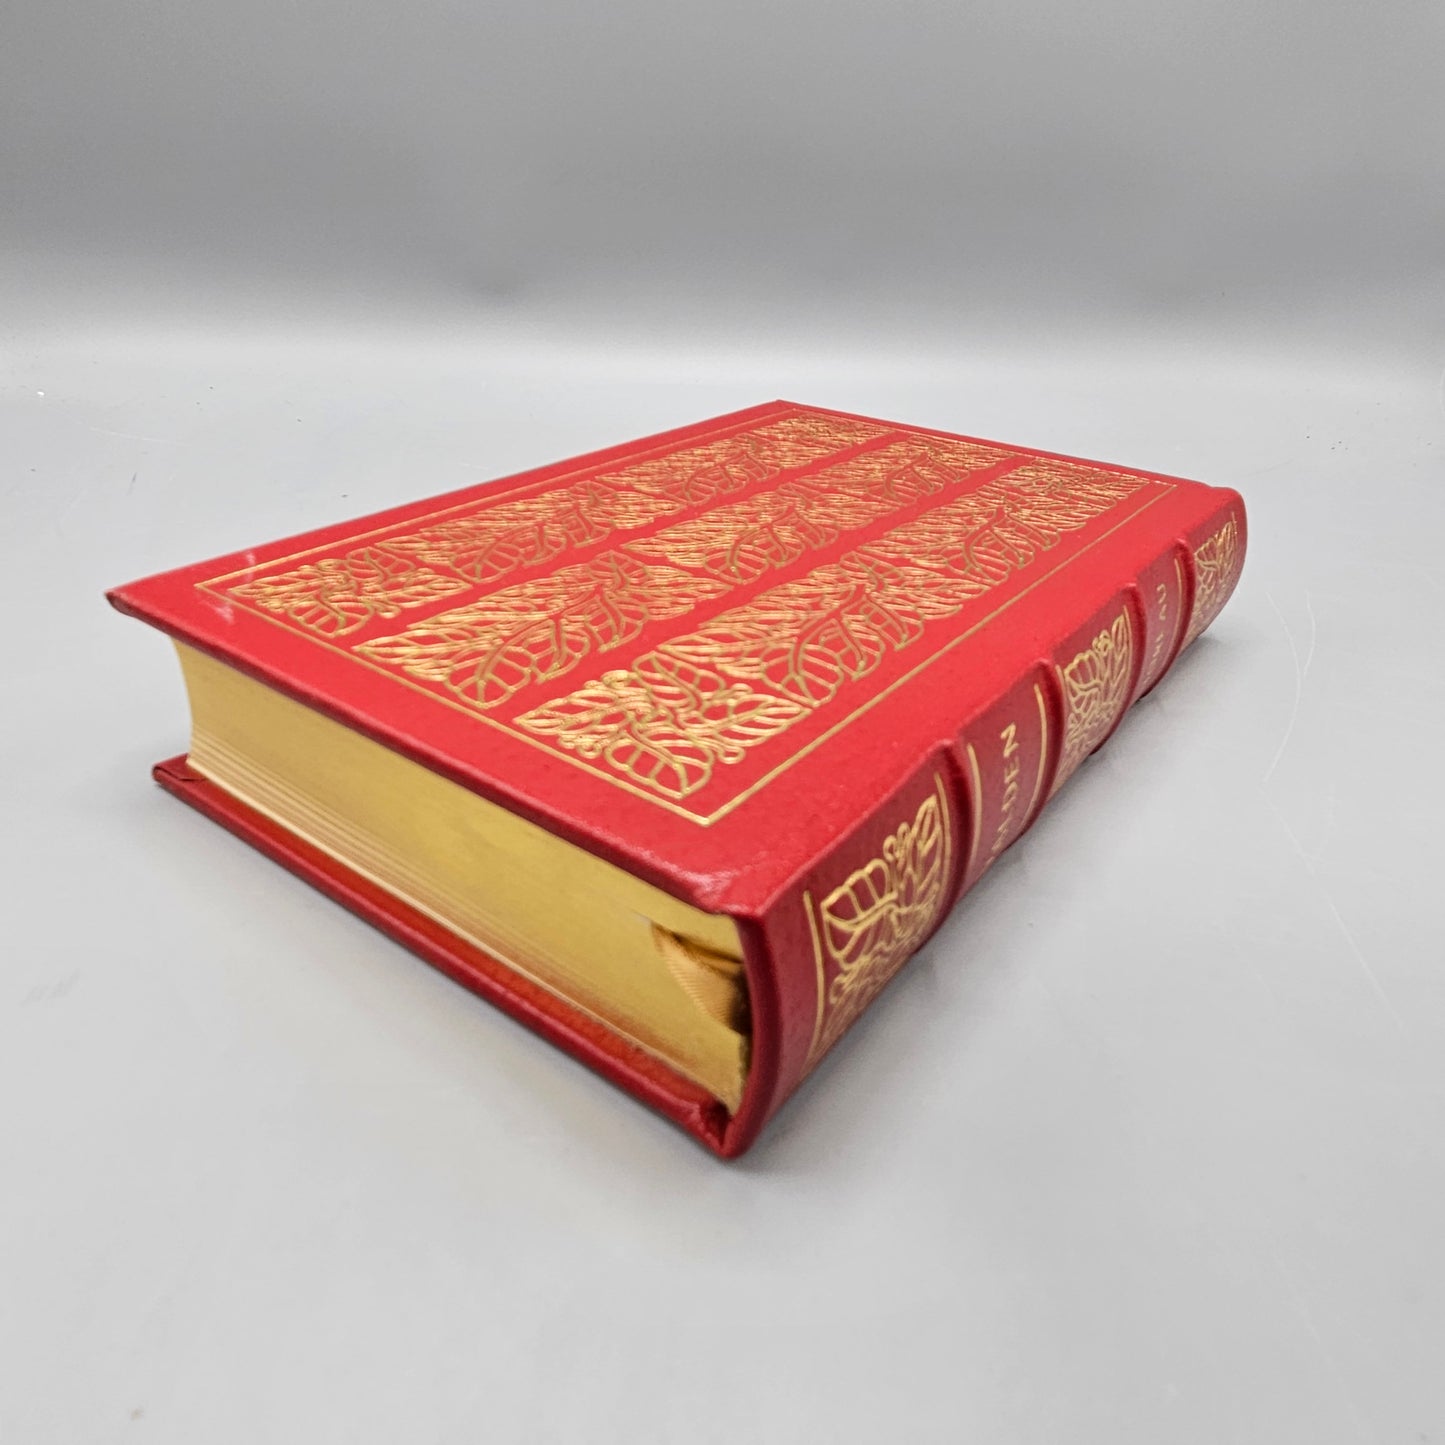 Leatherbound Book - Henry David Thoreau "Walden" Easton Press